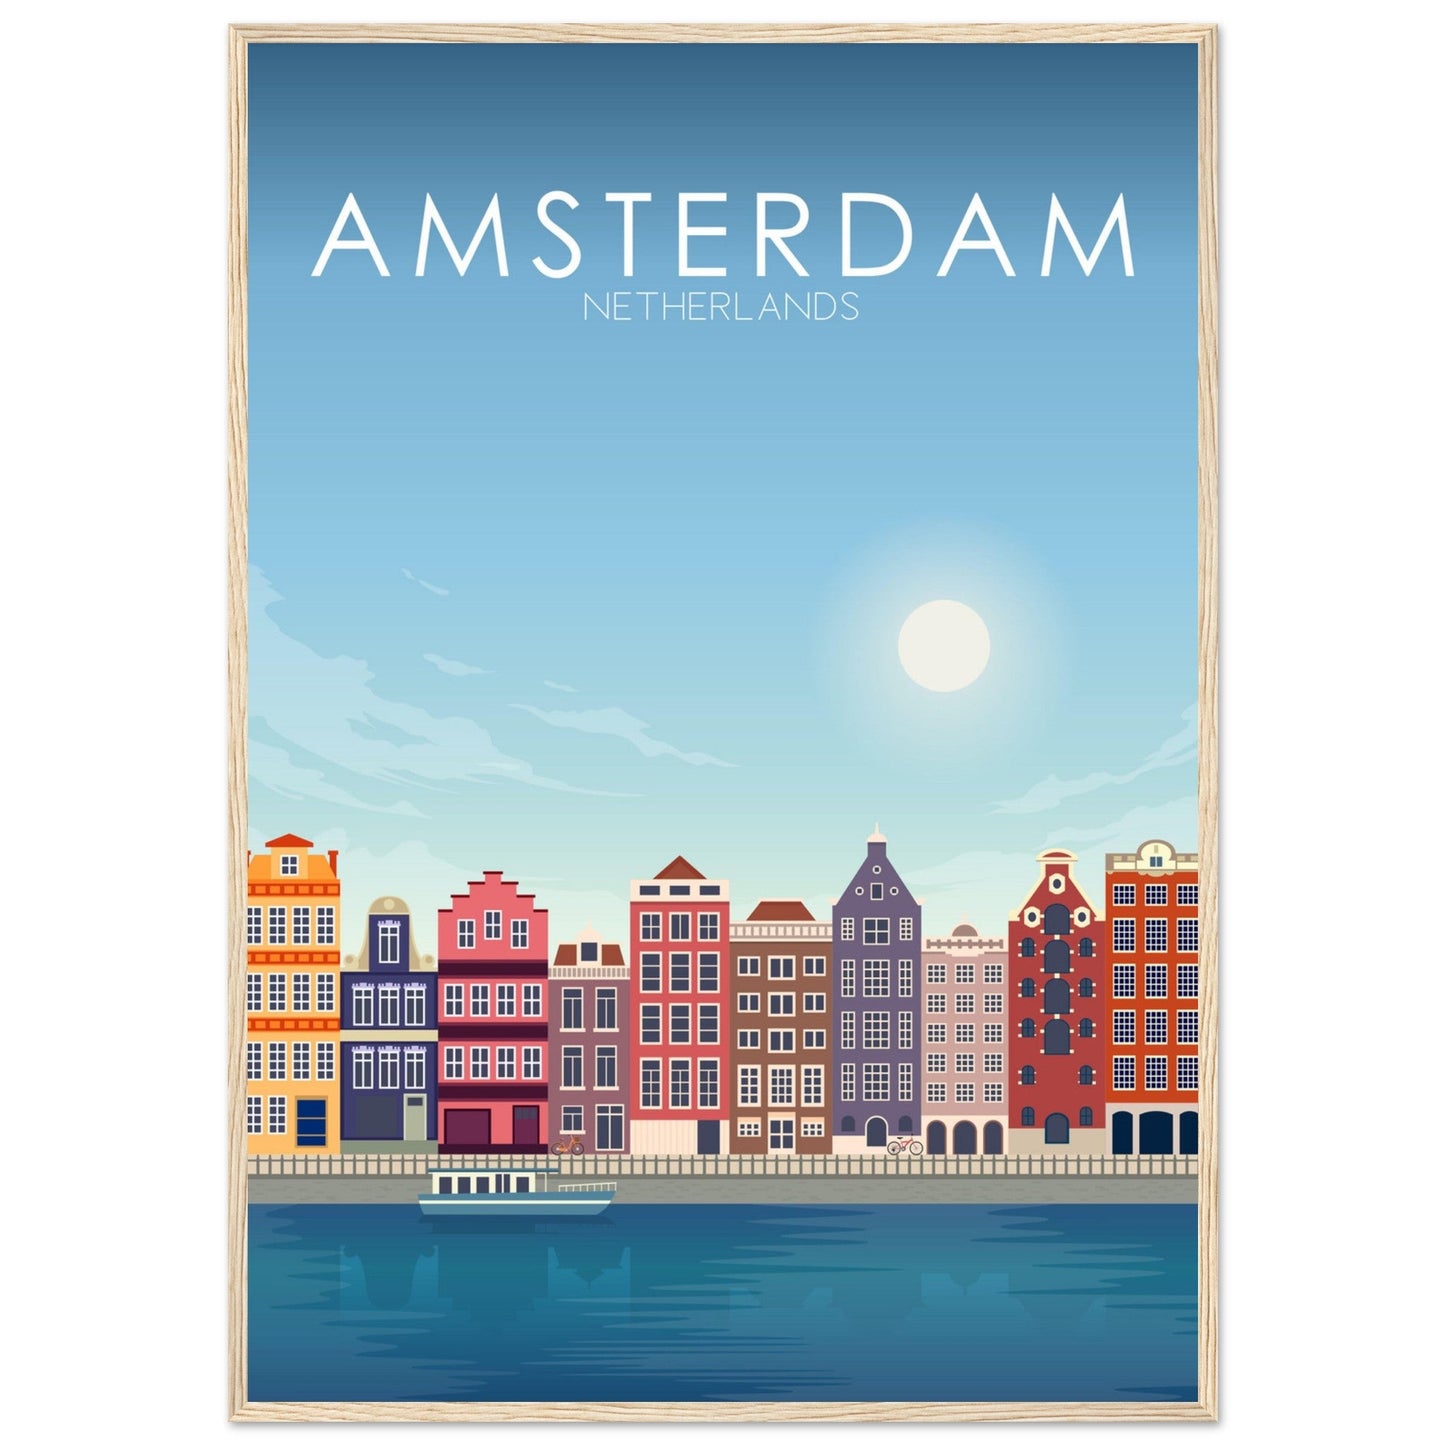 Amsterdam Poster | Amsterdam Wall Art | Amsterdam Daytime Print